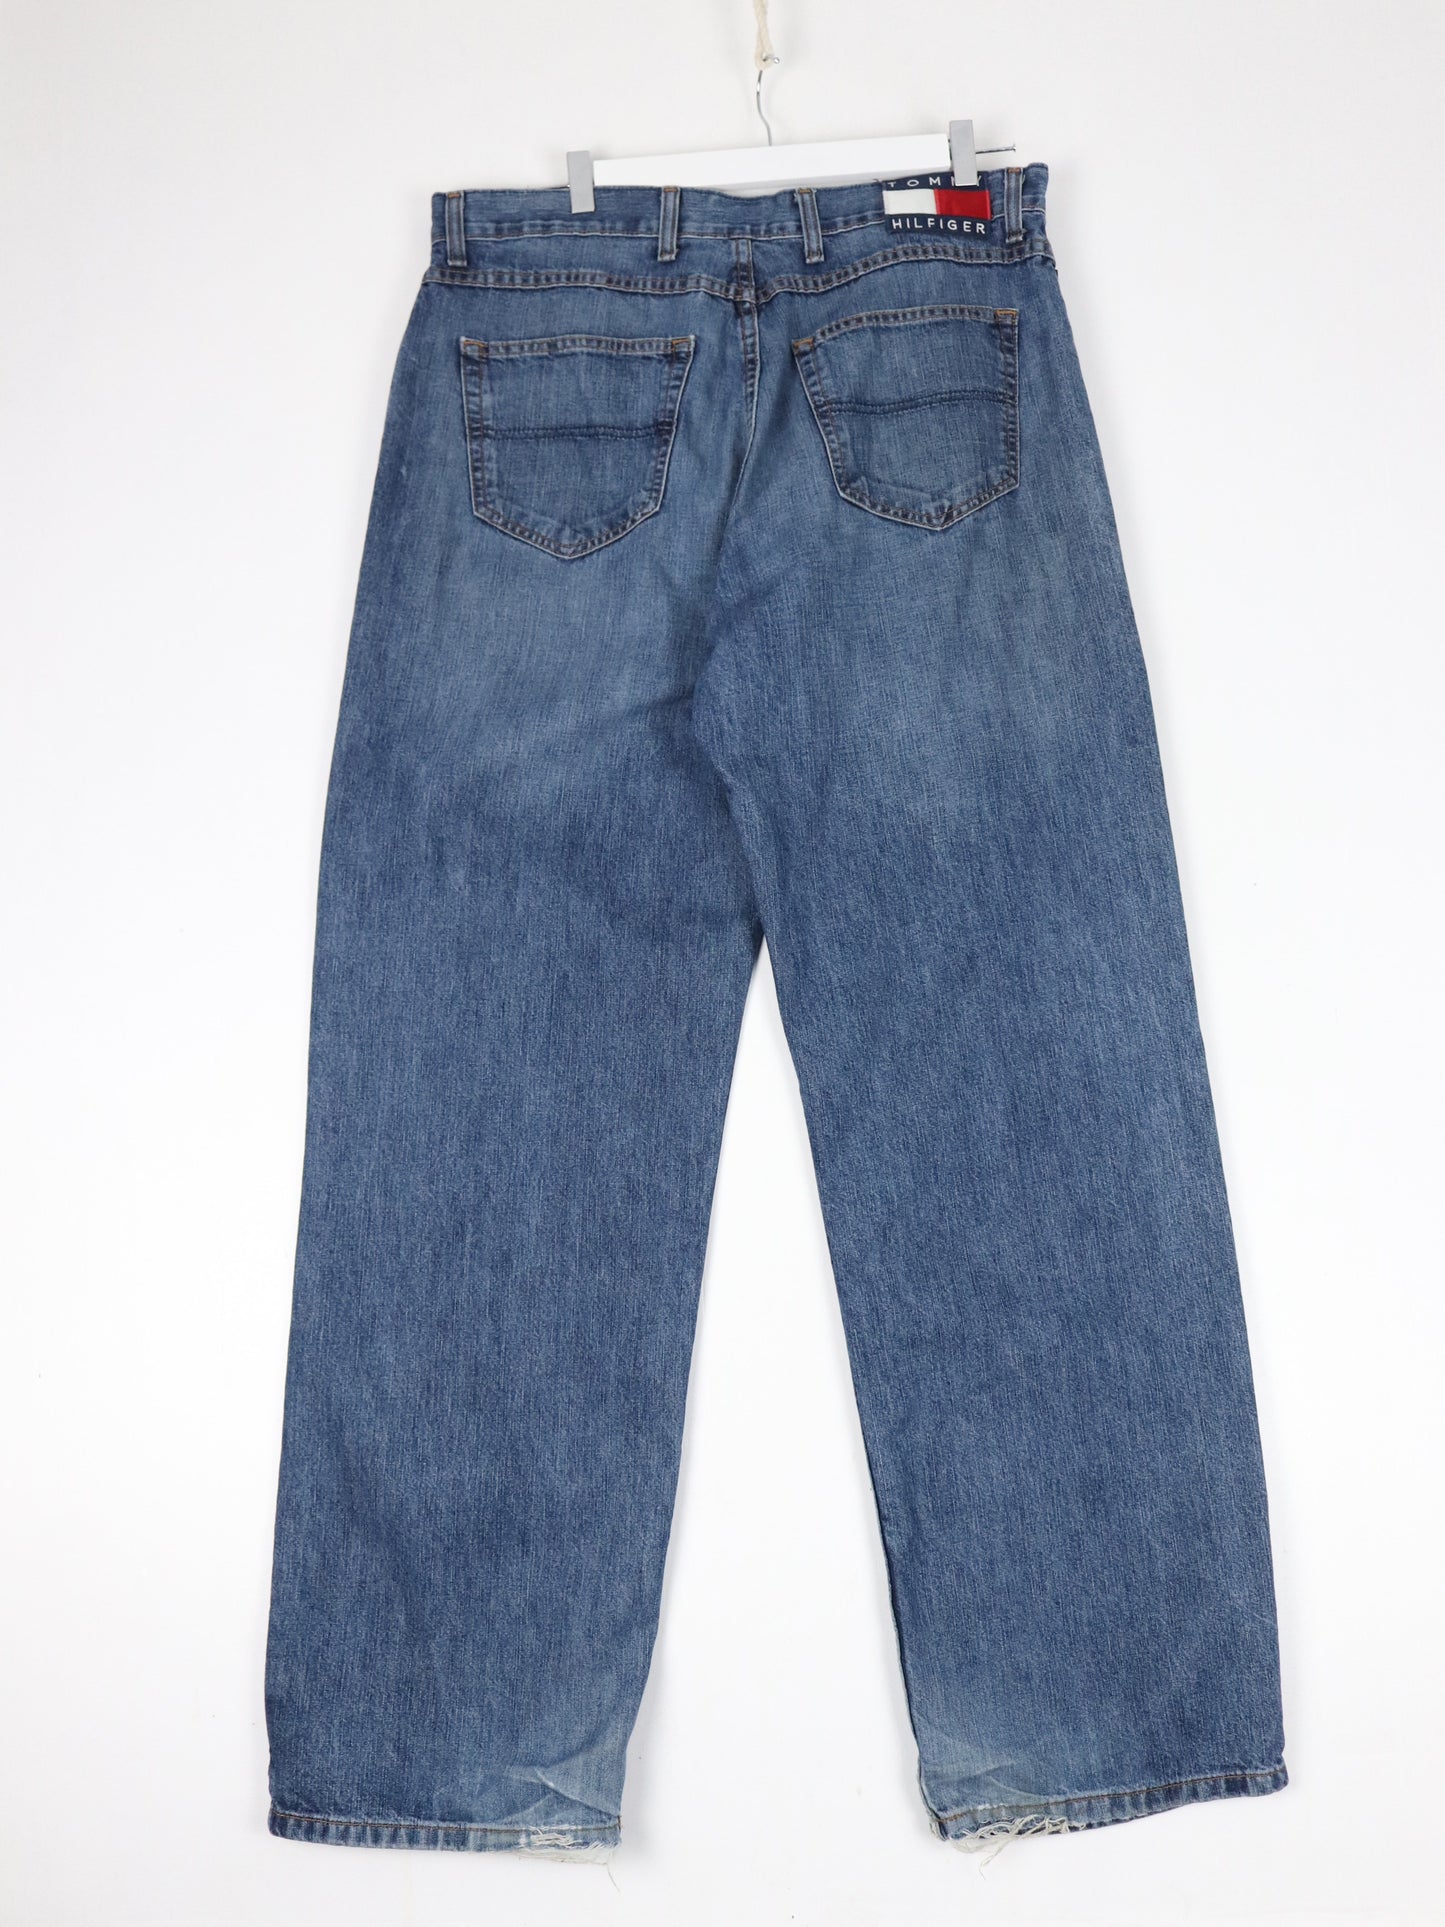 Vintage Tommy Hilfiger Pants Mens 36 x 32 Blue Denim Jeans